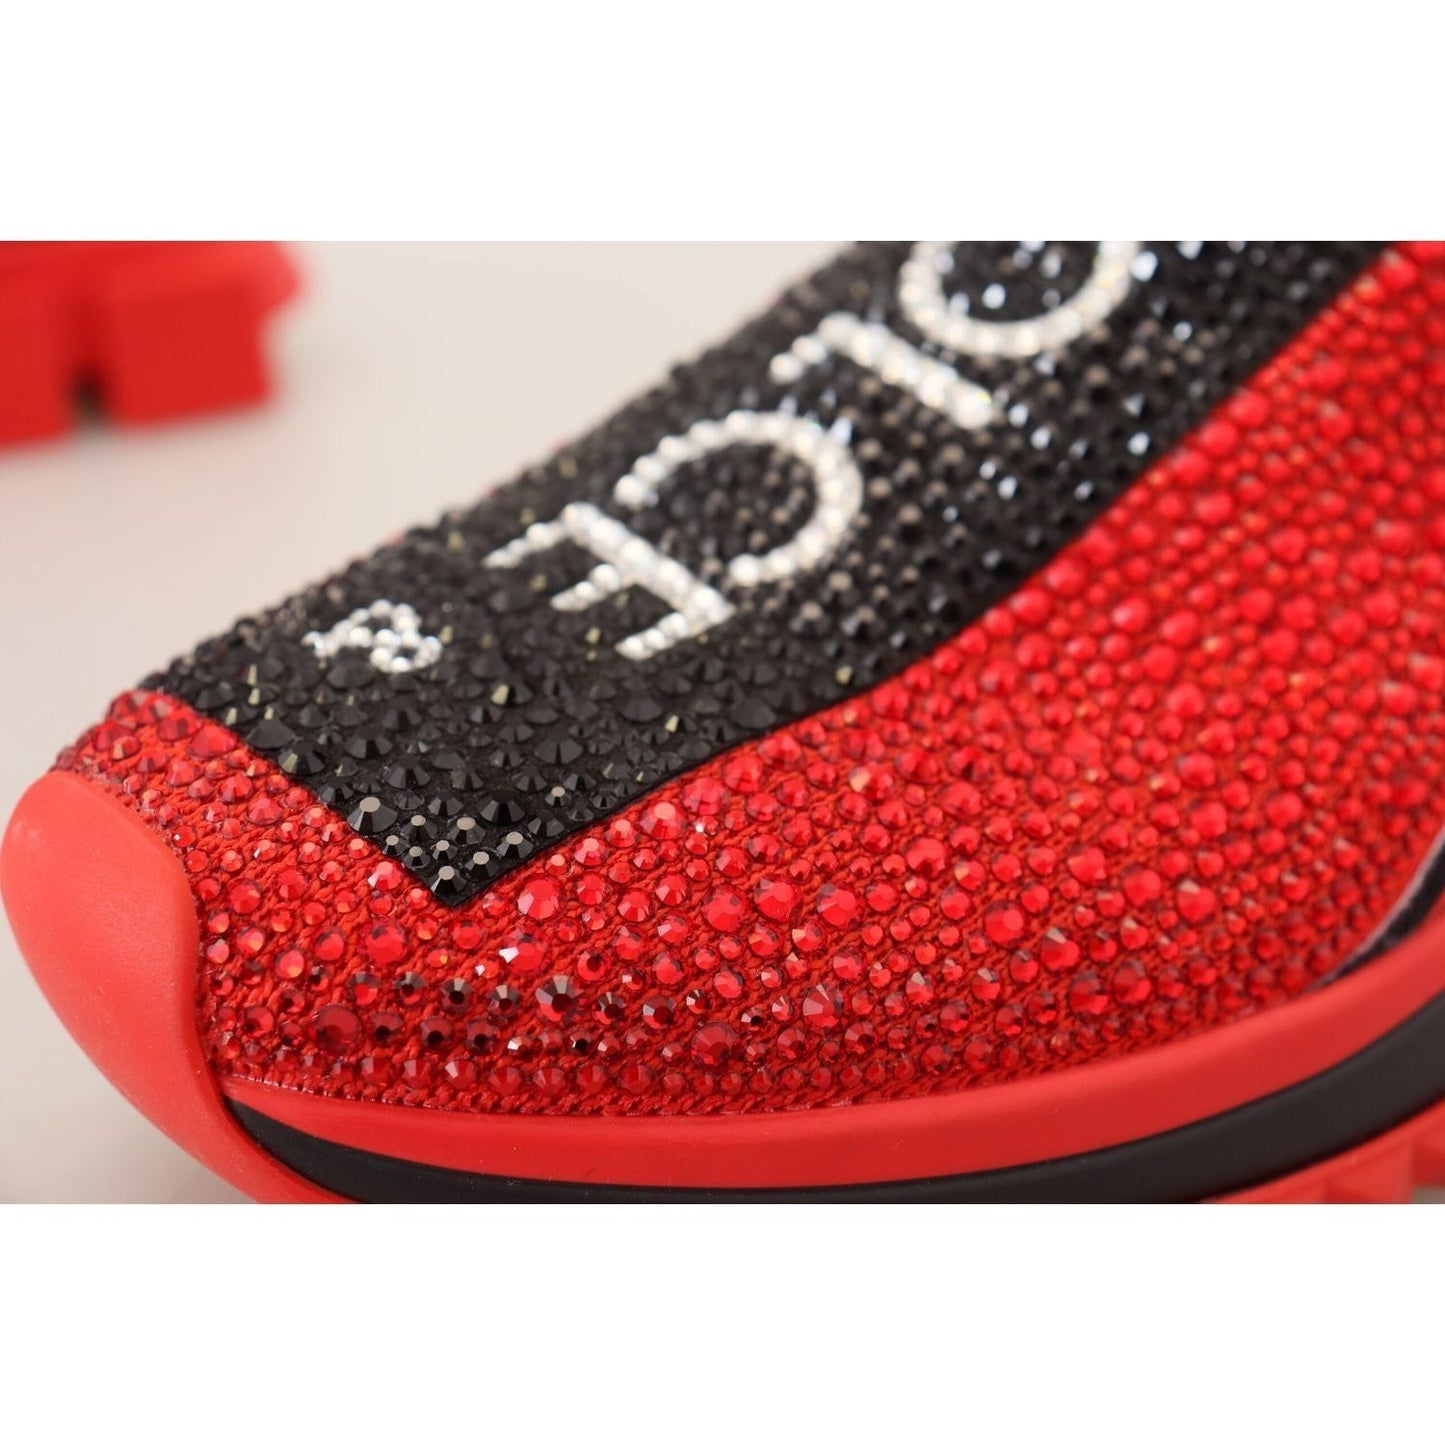 Dolce & Gabbana Exquisite Red Sorrento Slip-On Sneakers red-bling-sorrento-sneakers-socks-shoes IMG_5084-scaled-090973da-2b5.jpg